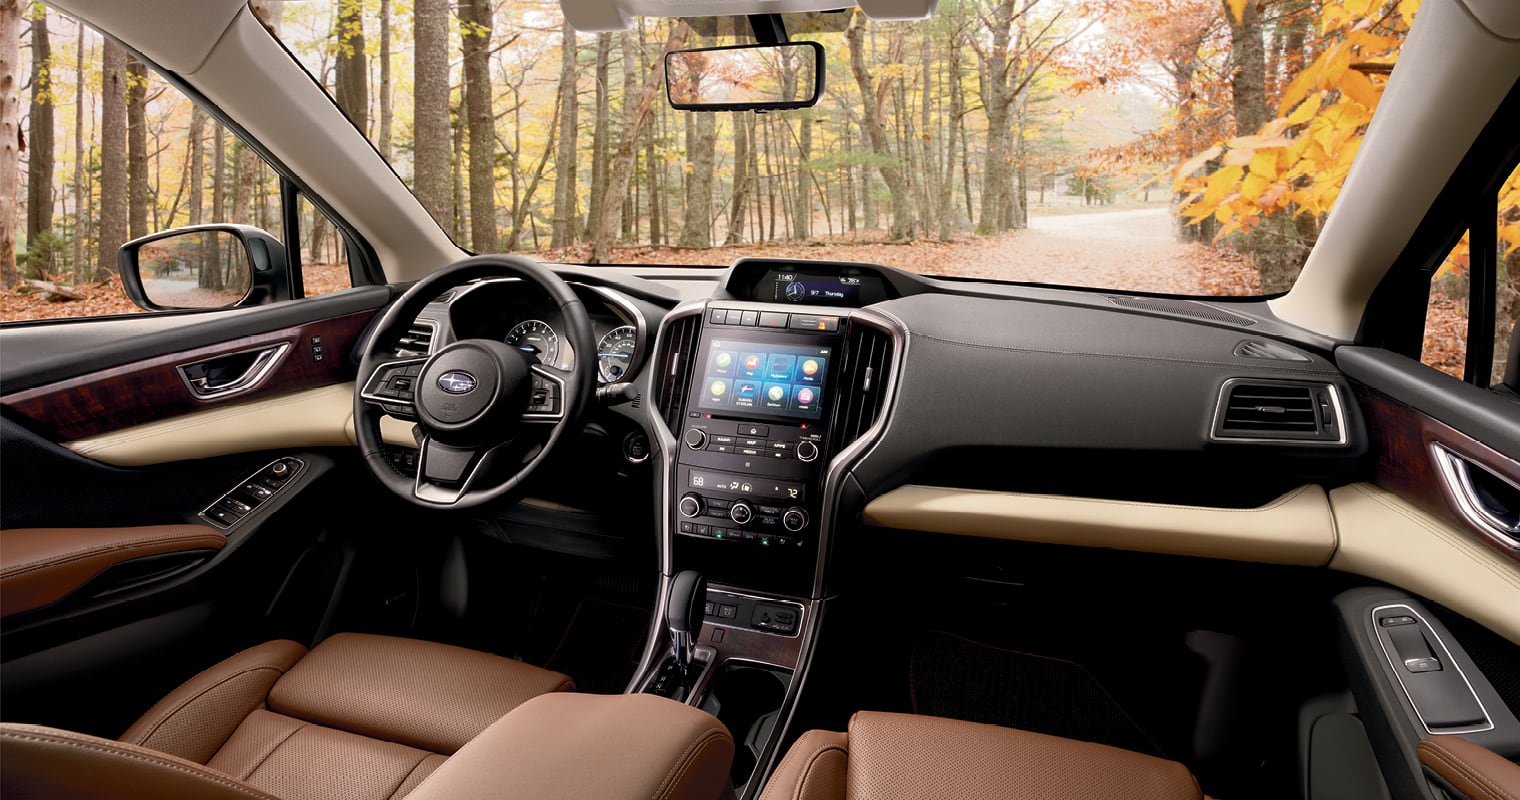 2022 Subaru Ascent interior, dash and infotainment